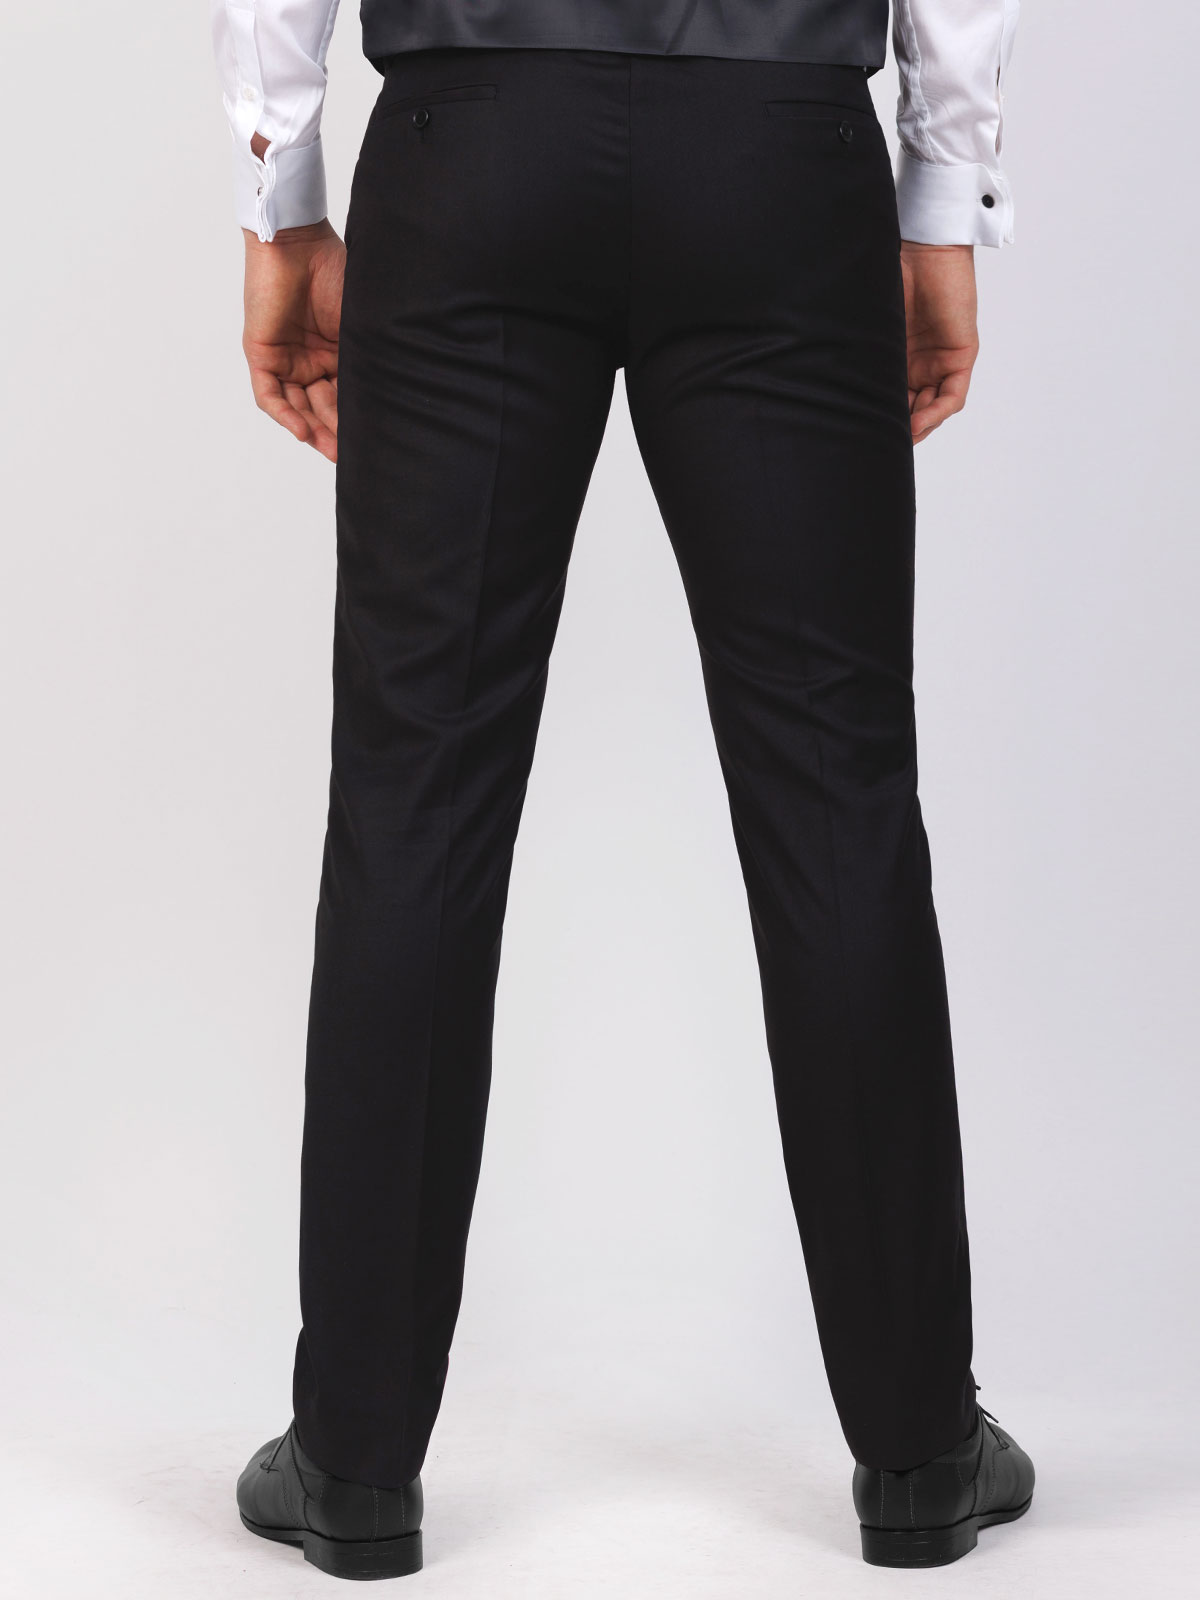 Pants in classic black - 63332 € 60.74 img4